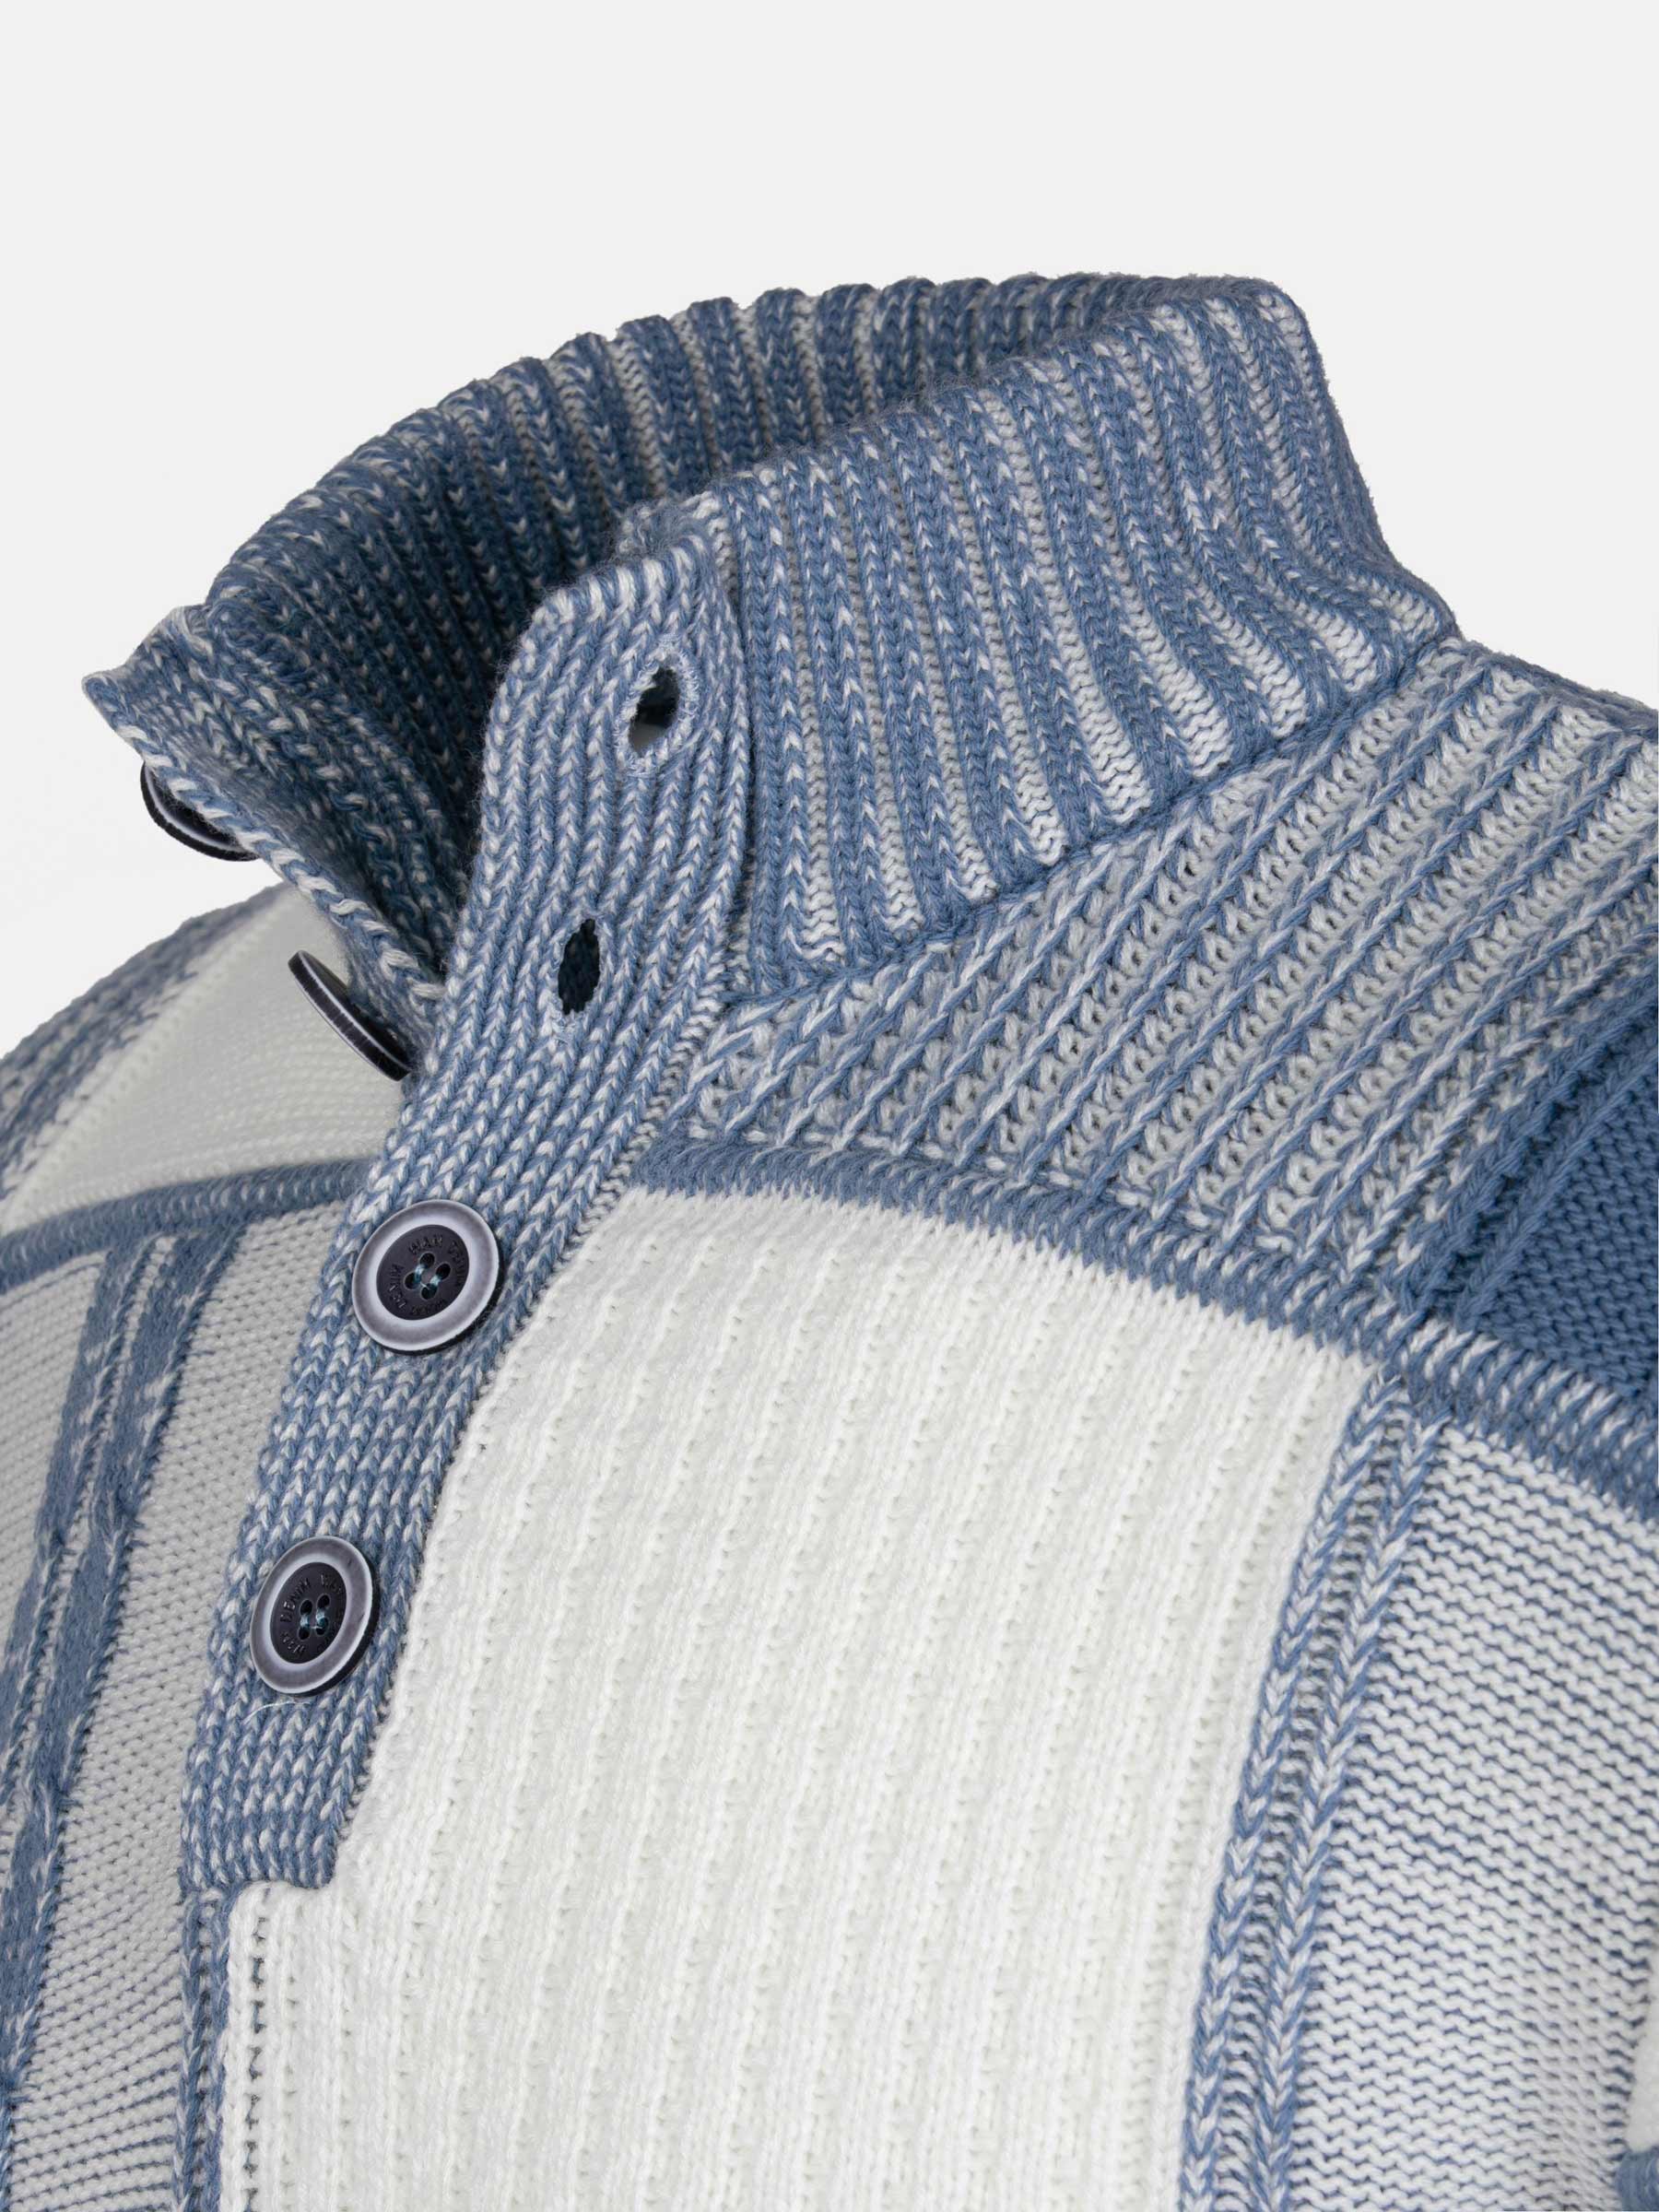 Cambridge Pattern Blue White Knitwear 